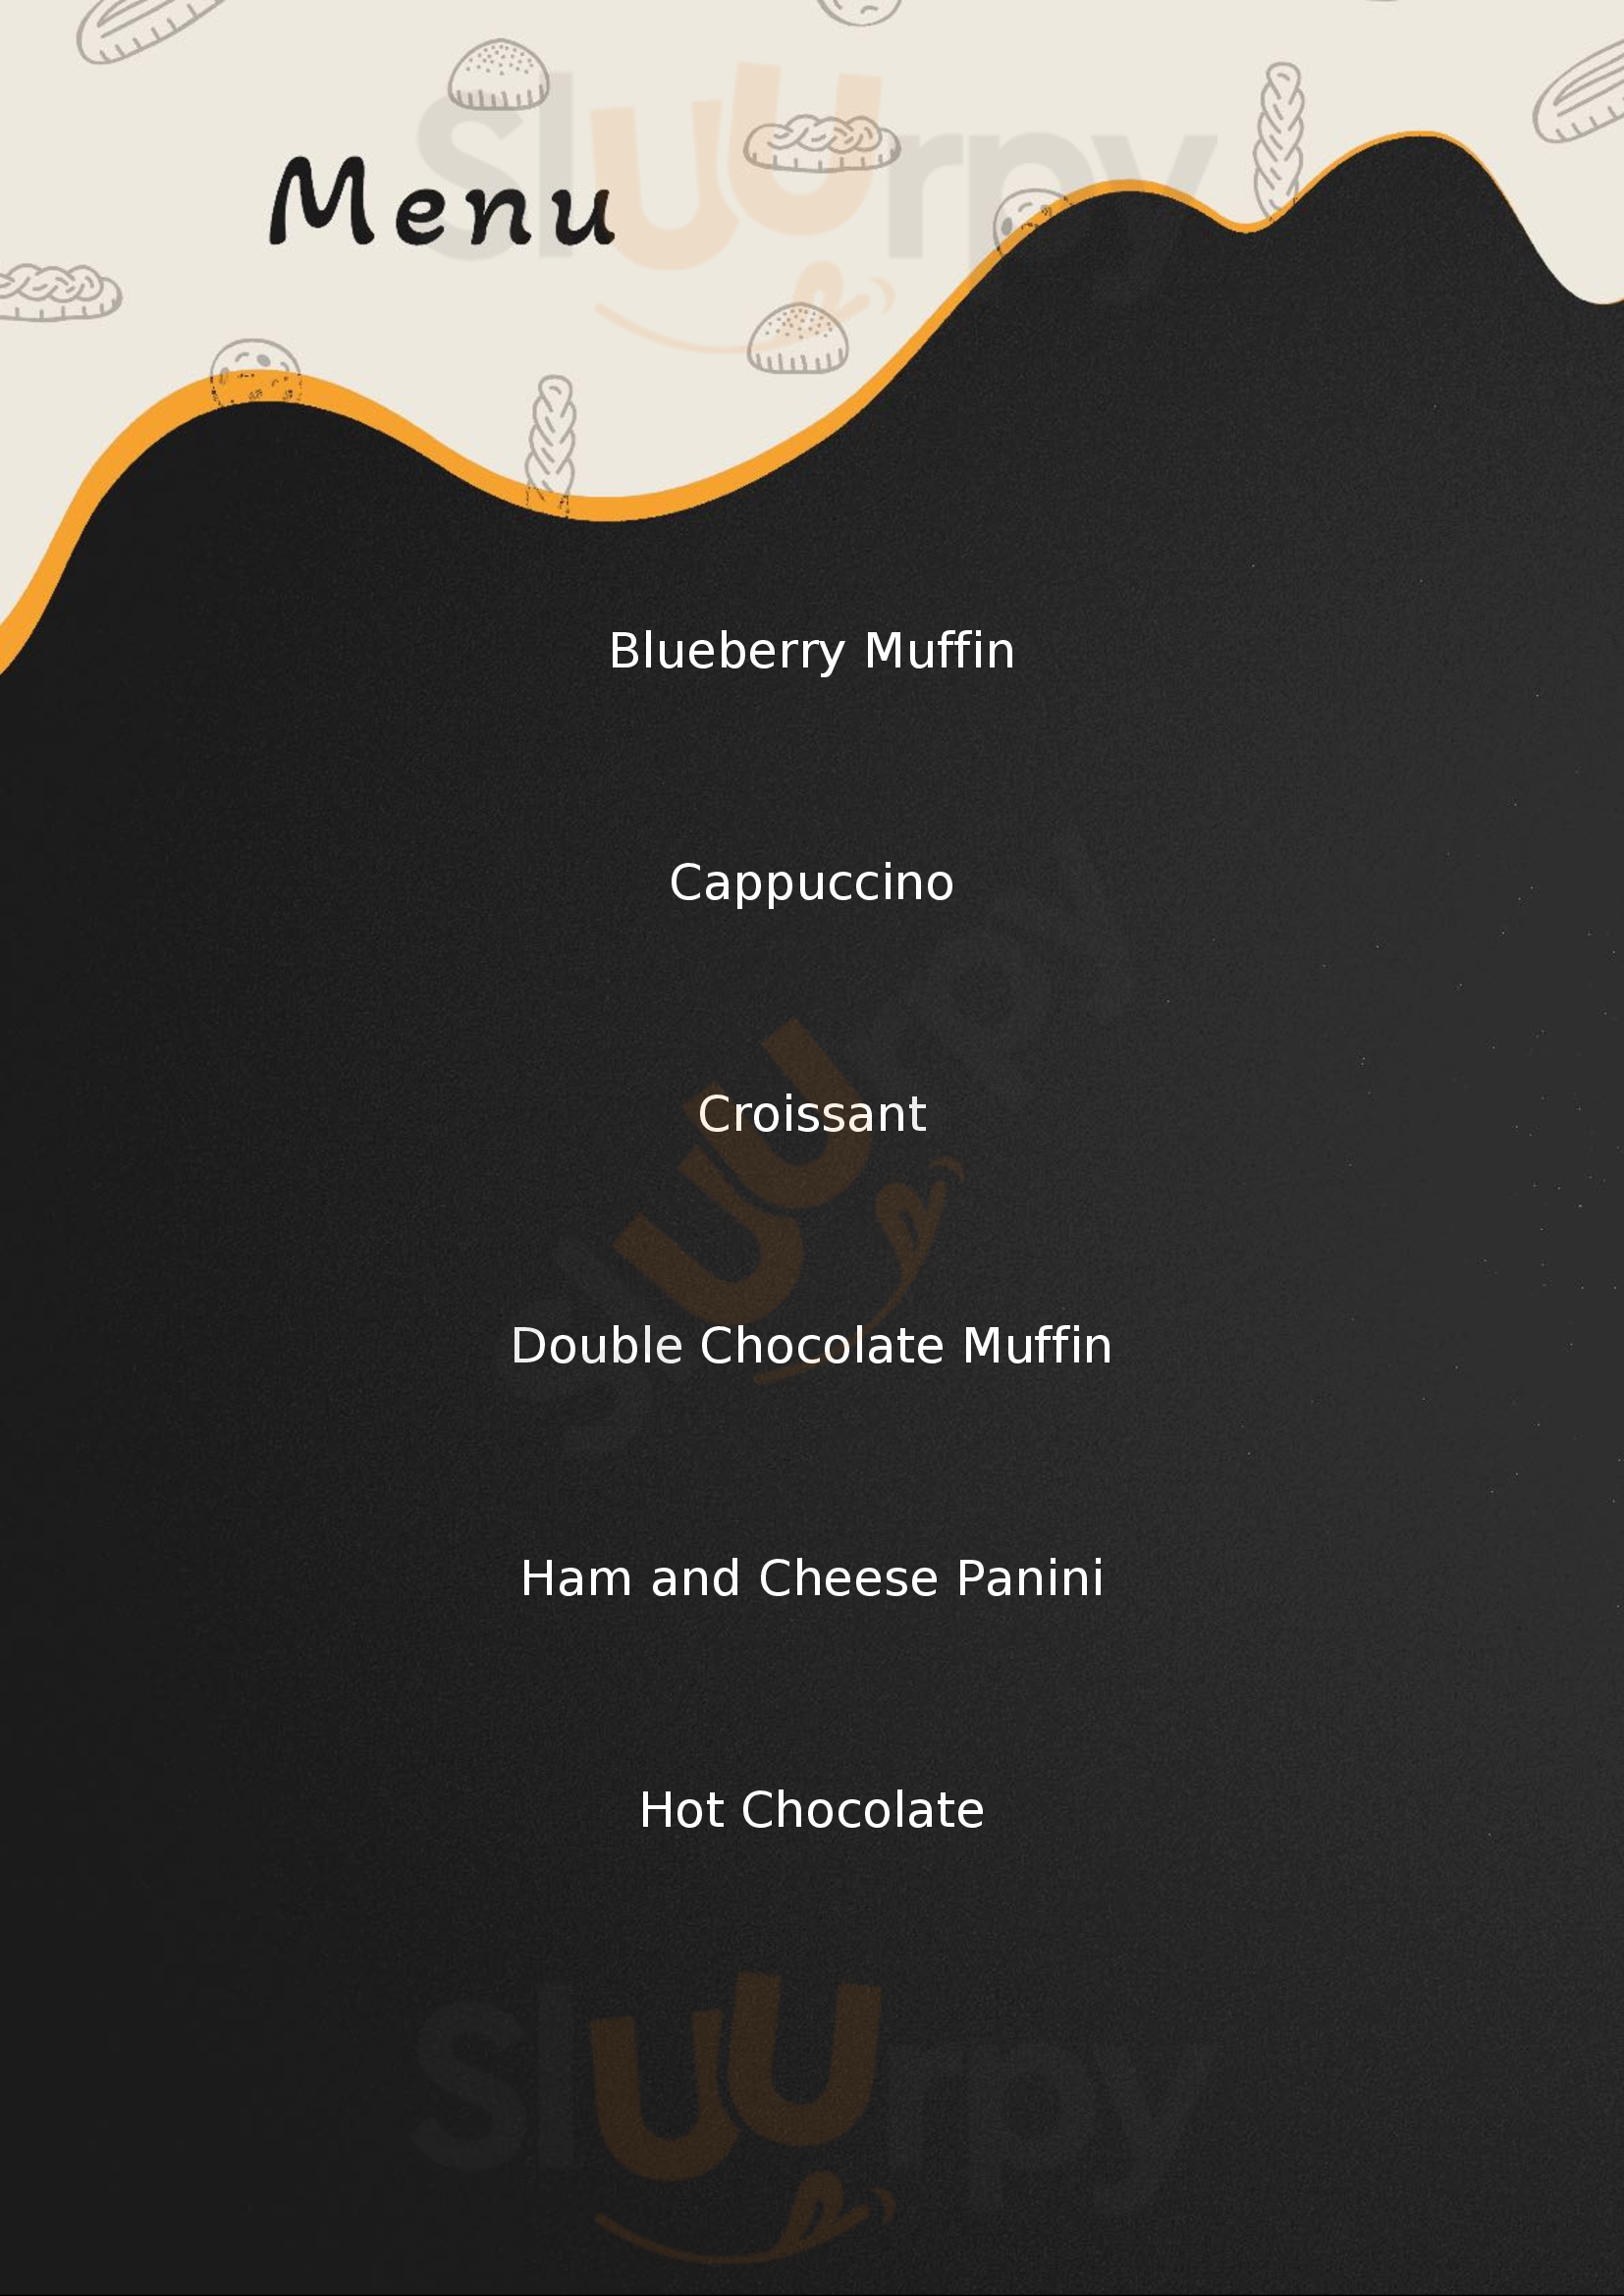 Bbs Coffee & Muffins Maidstone Menu - 1